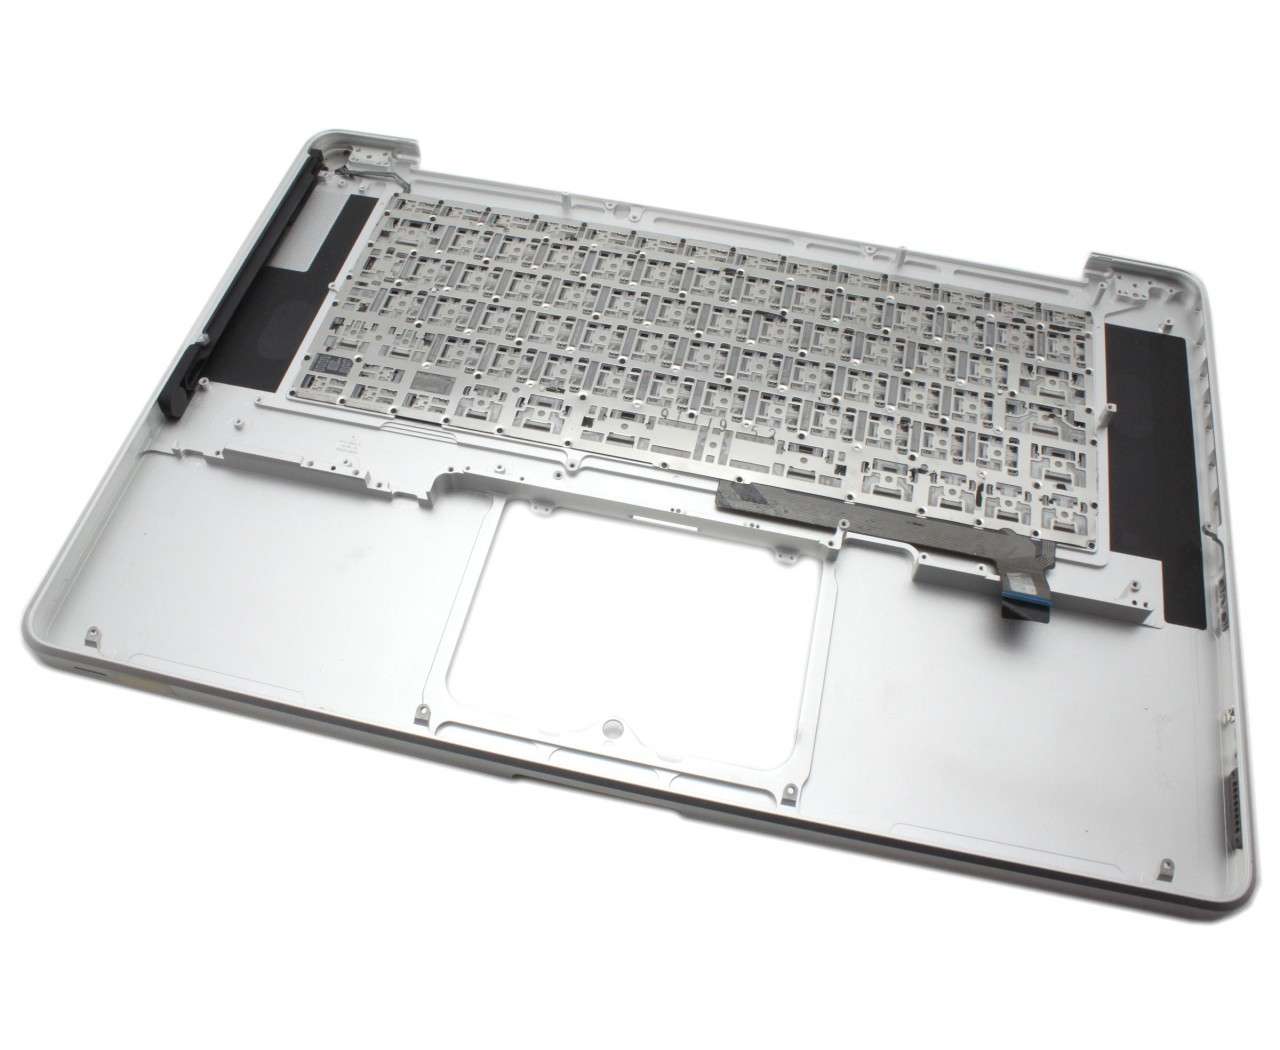 Tastatura Apple MacBook Pro 15 A1286 2011 Neagra cu Palmrest Argintiu Refurbished Apple Apple